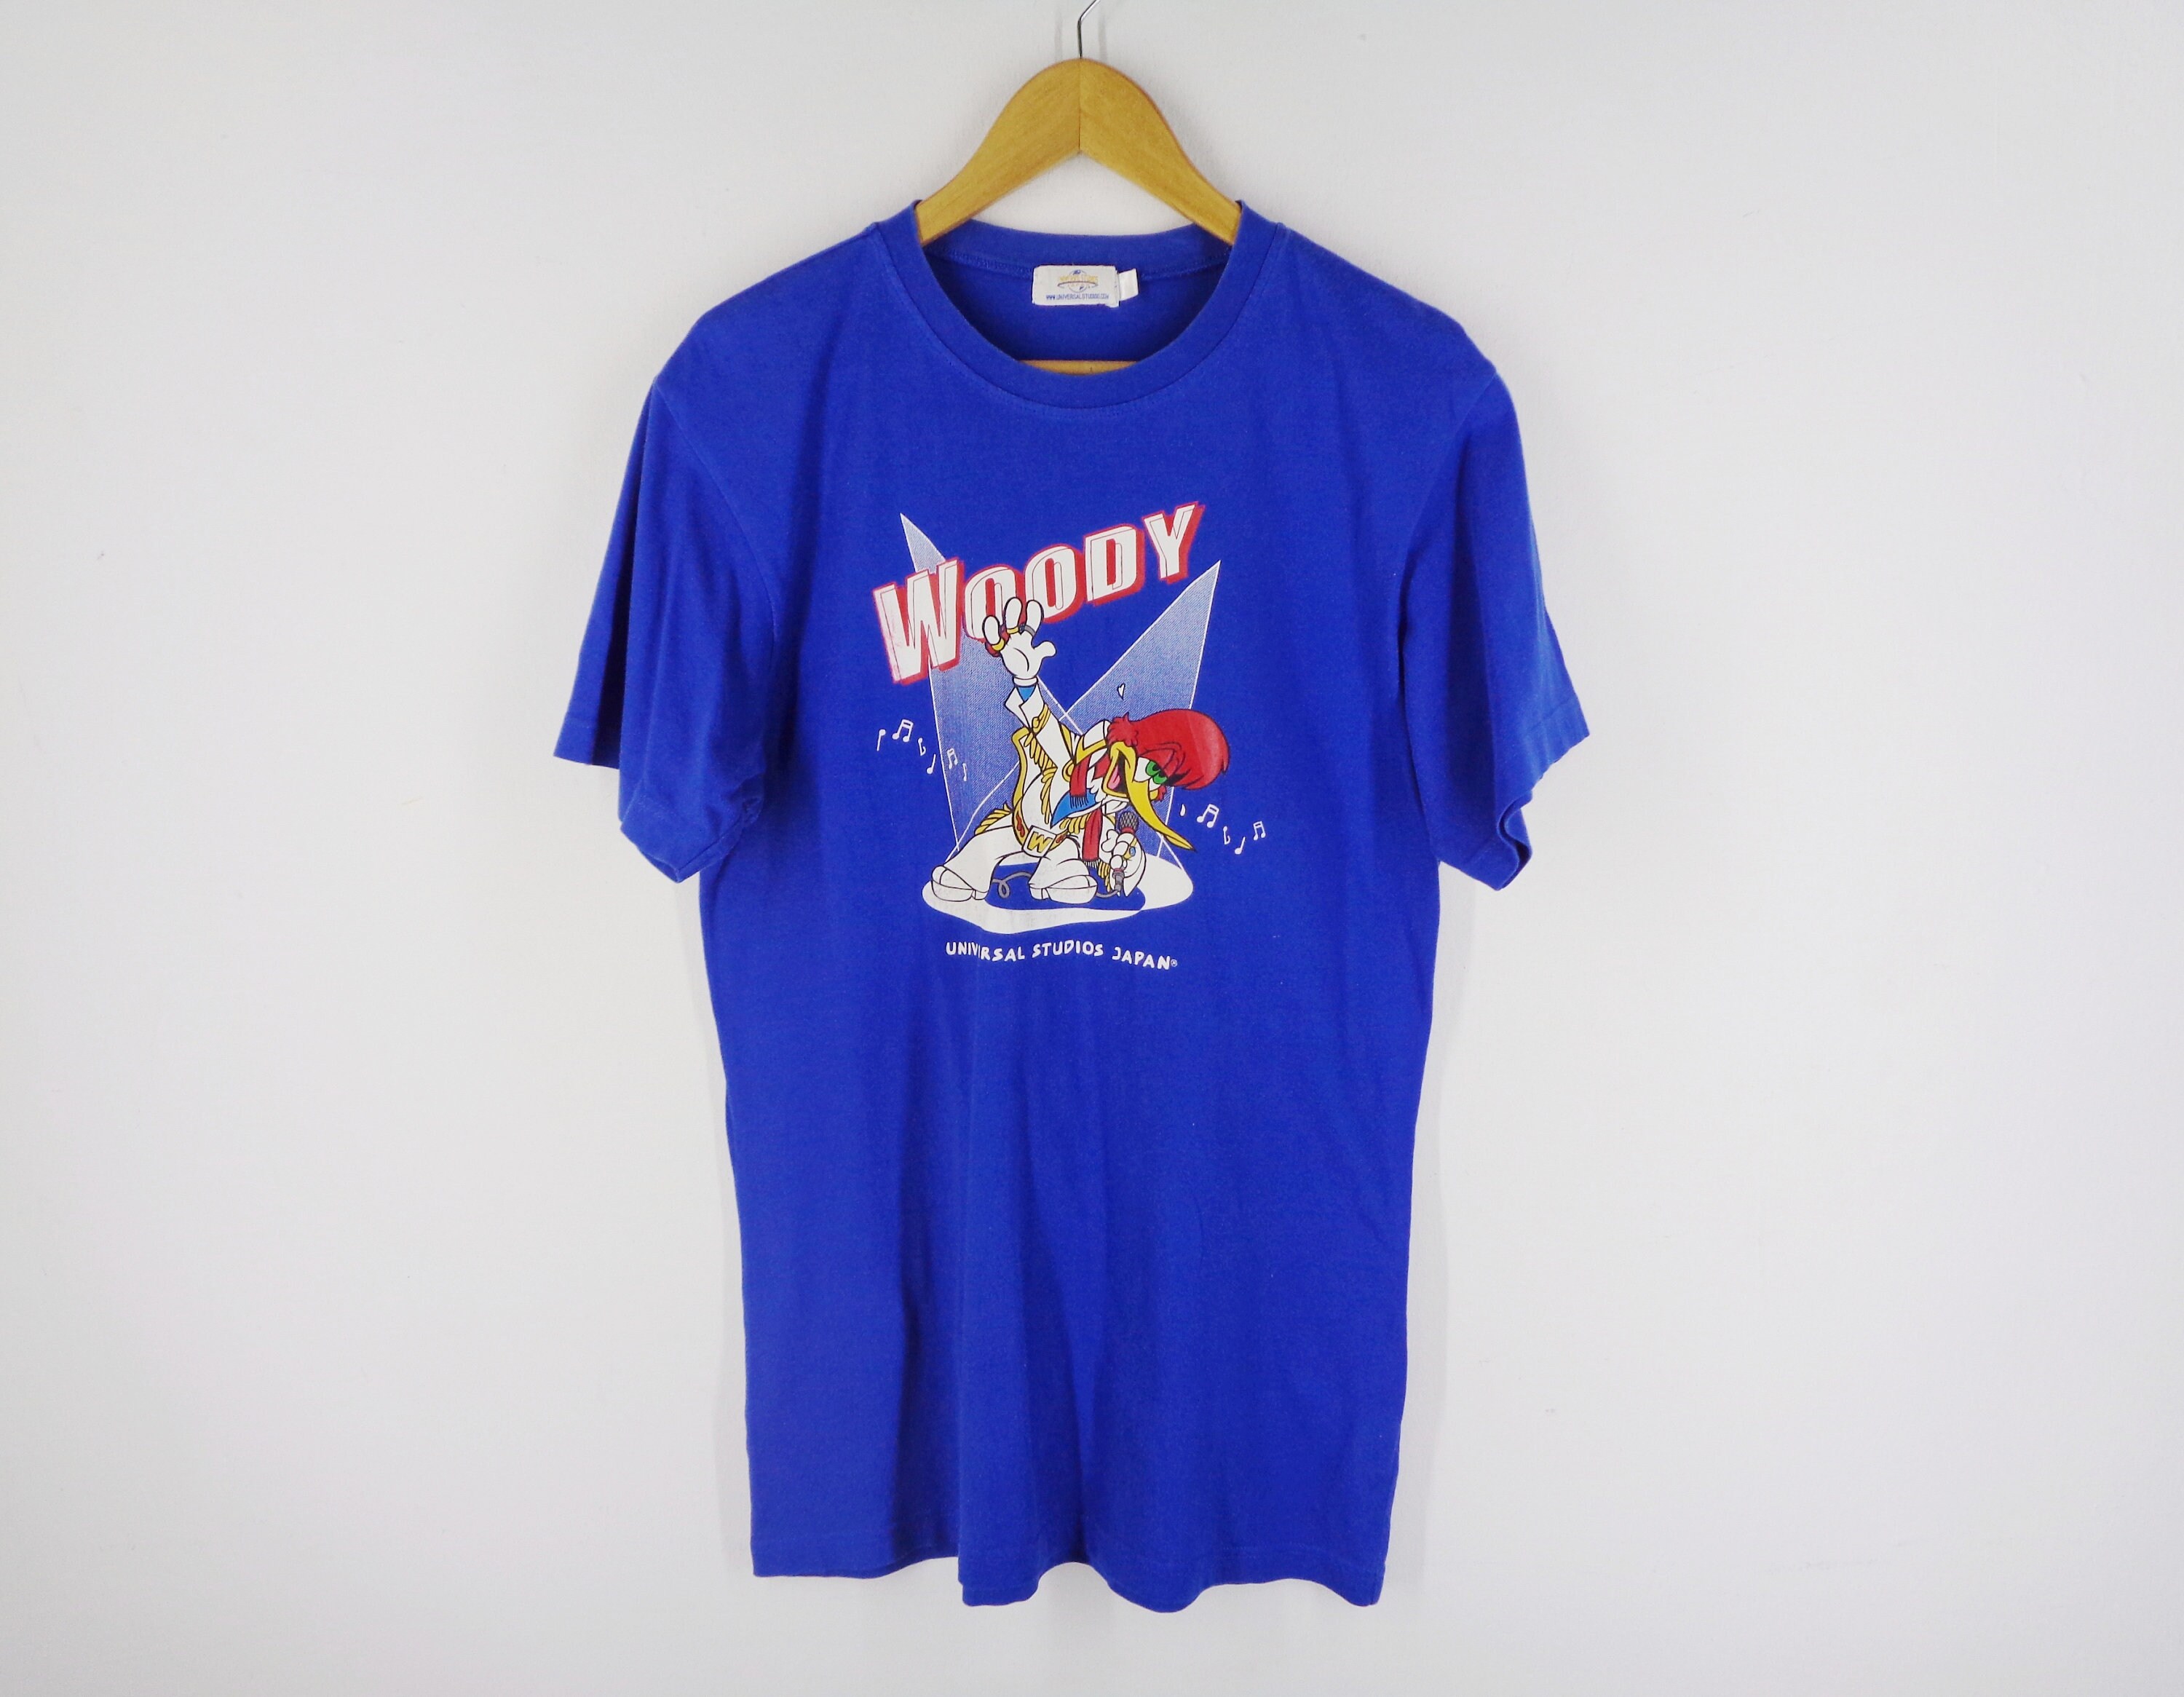 Woody Woodpecker Shirt Woody Woodpecker T Shirt Woody | Etsy